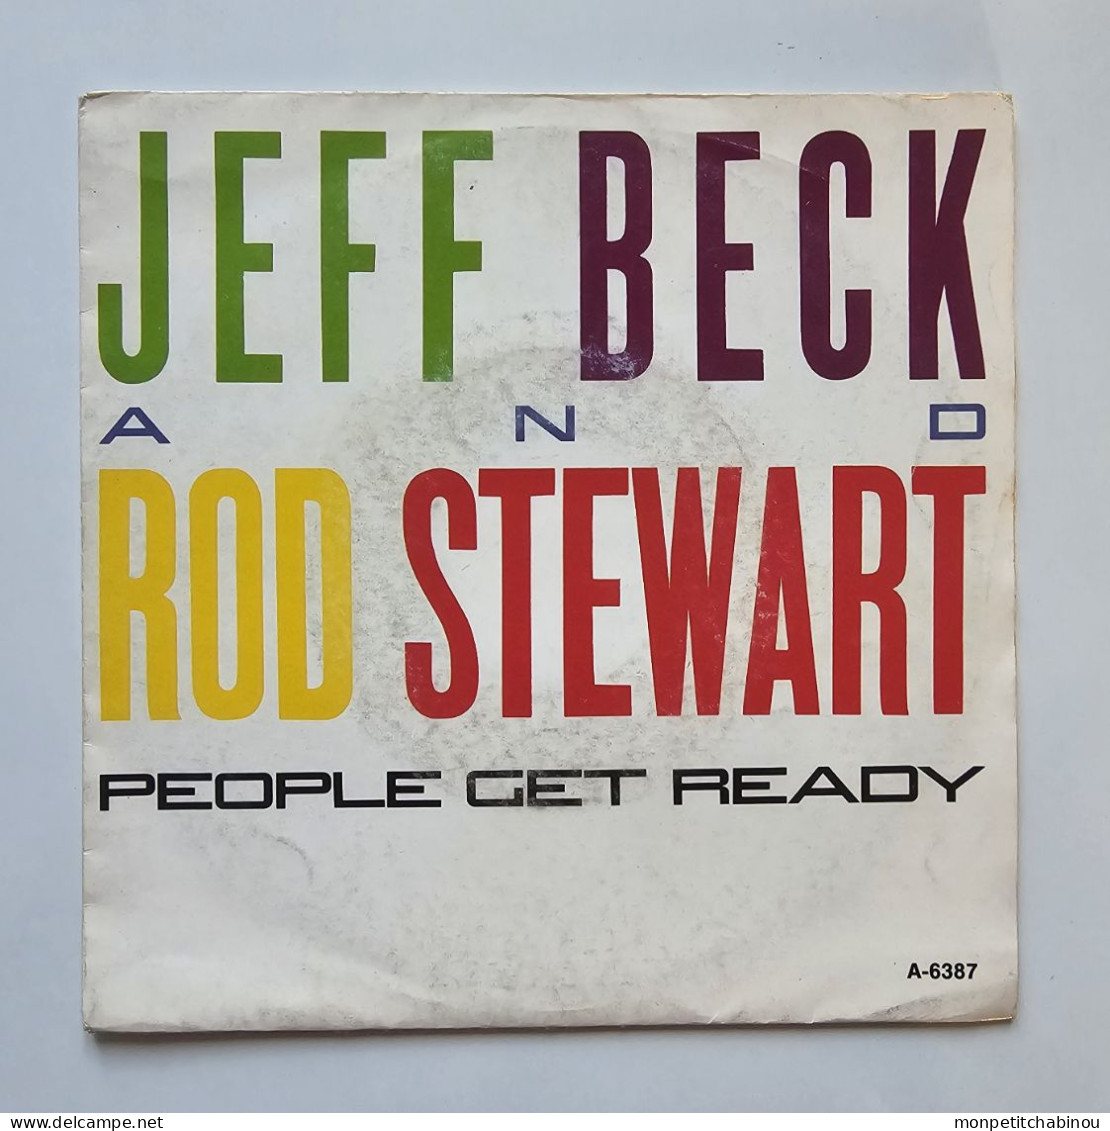 45T JEFF BECK & ROD STEWART : People Get Ready - Andere - Engelstalig